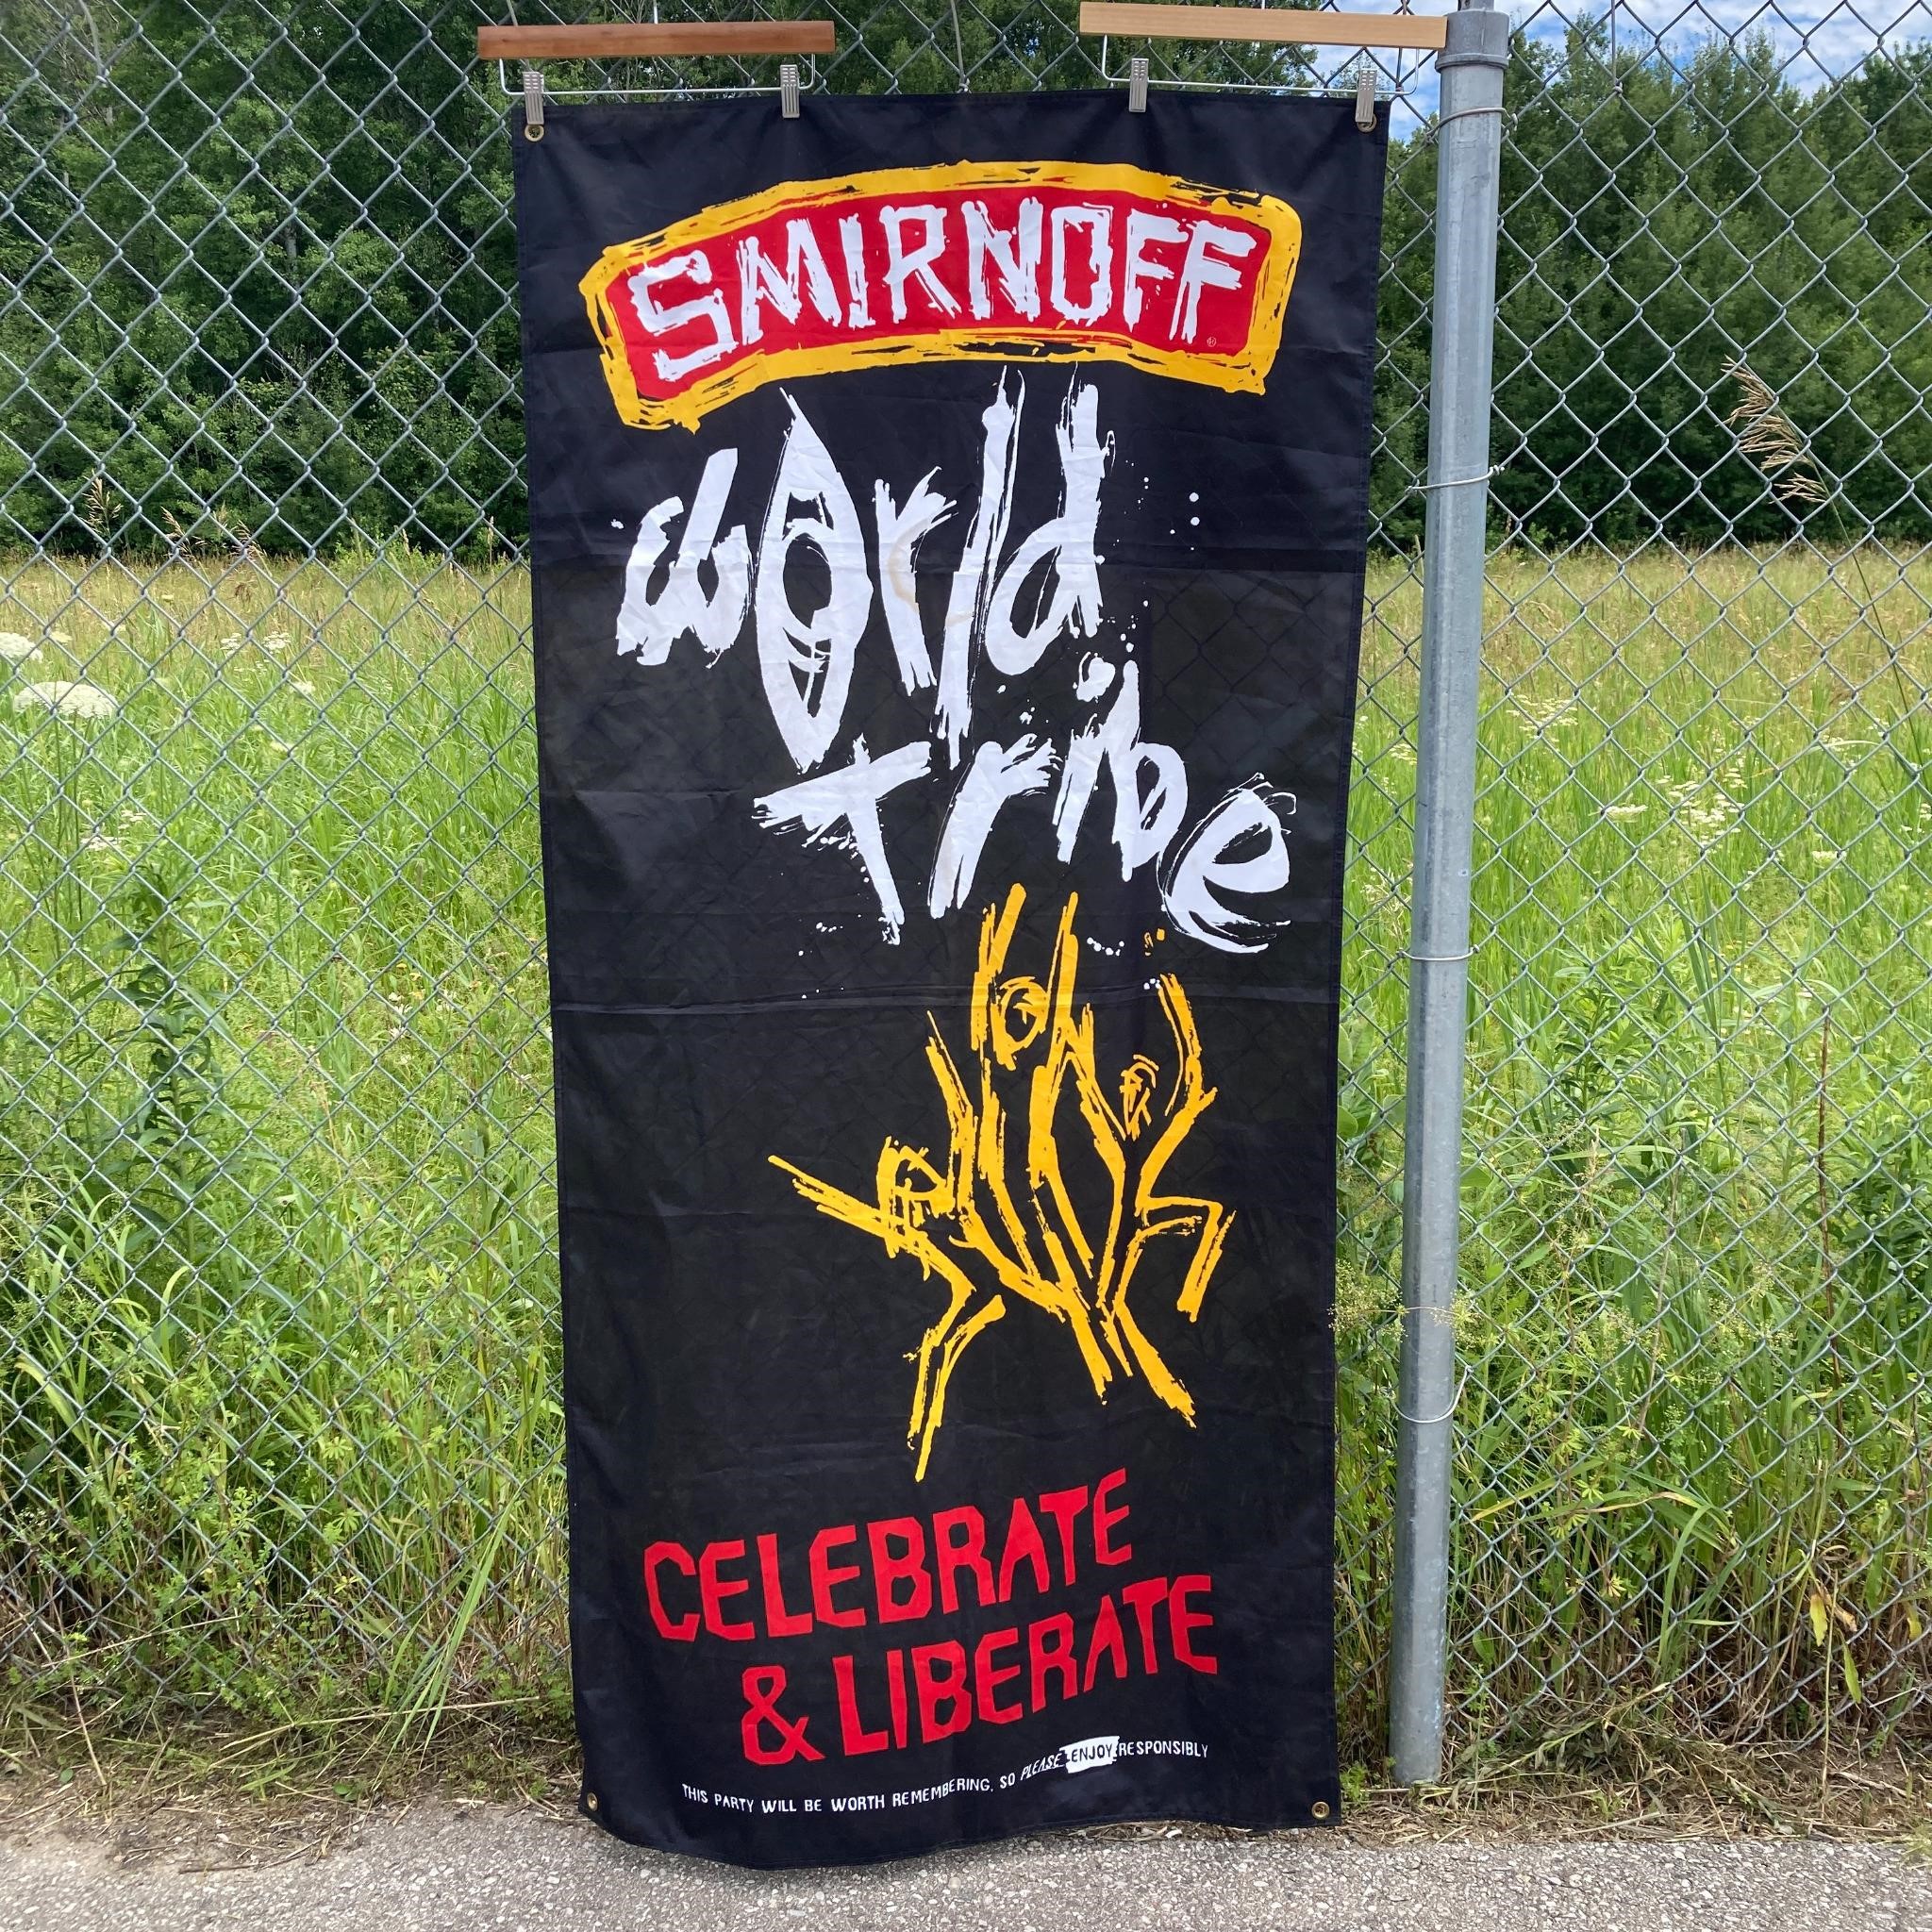 Smirnoff Vodka Promotional Banner Flag Advertising